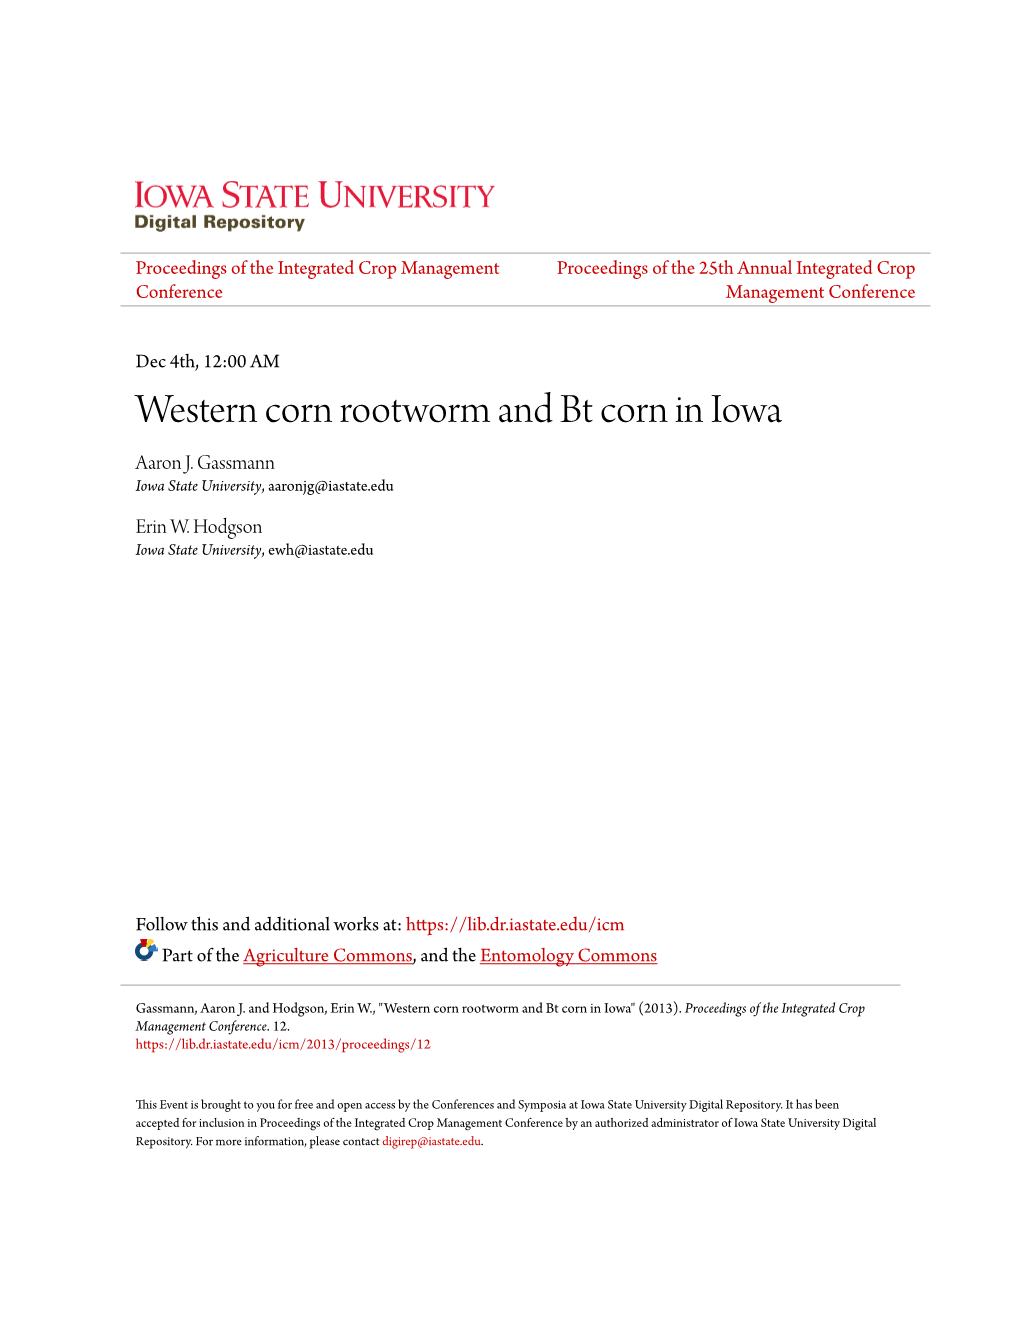 Western Corn Rootworm and Bt Corn in Iowa Aaron J